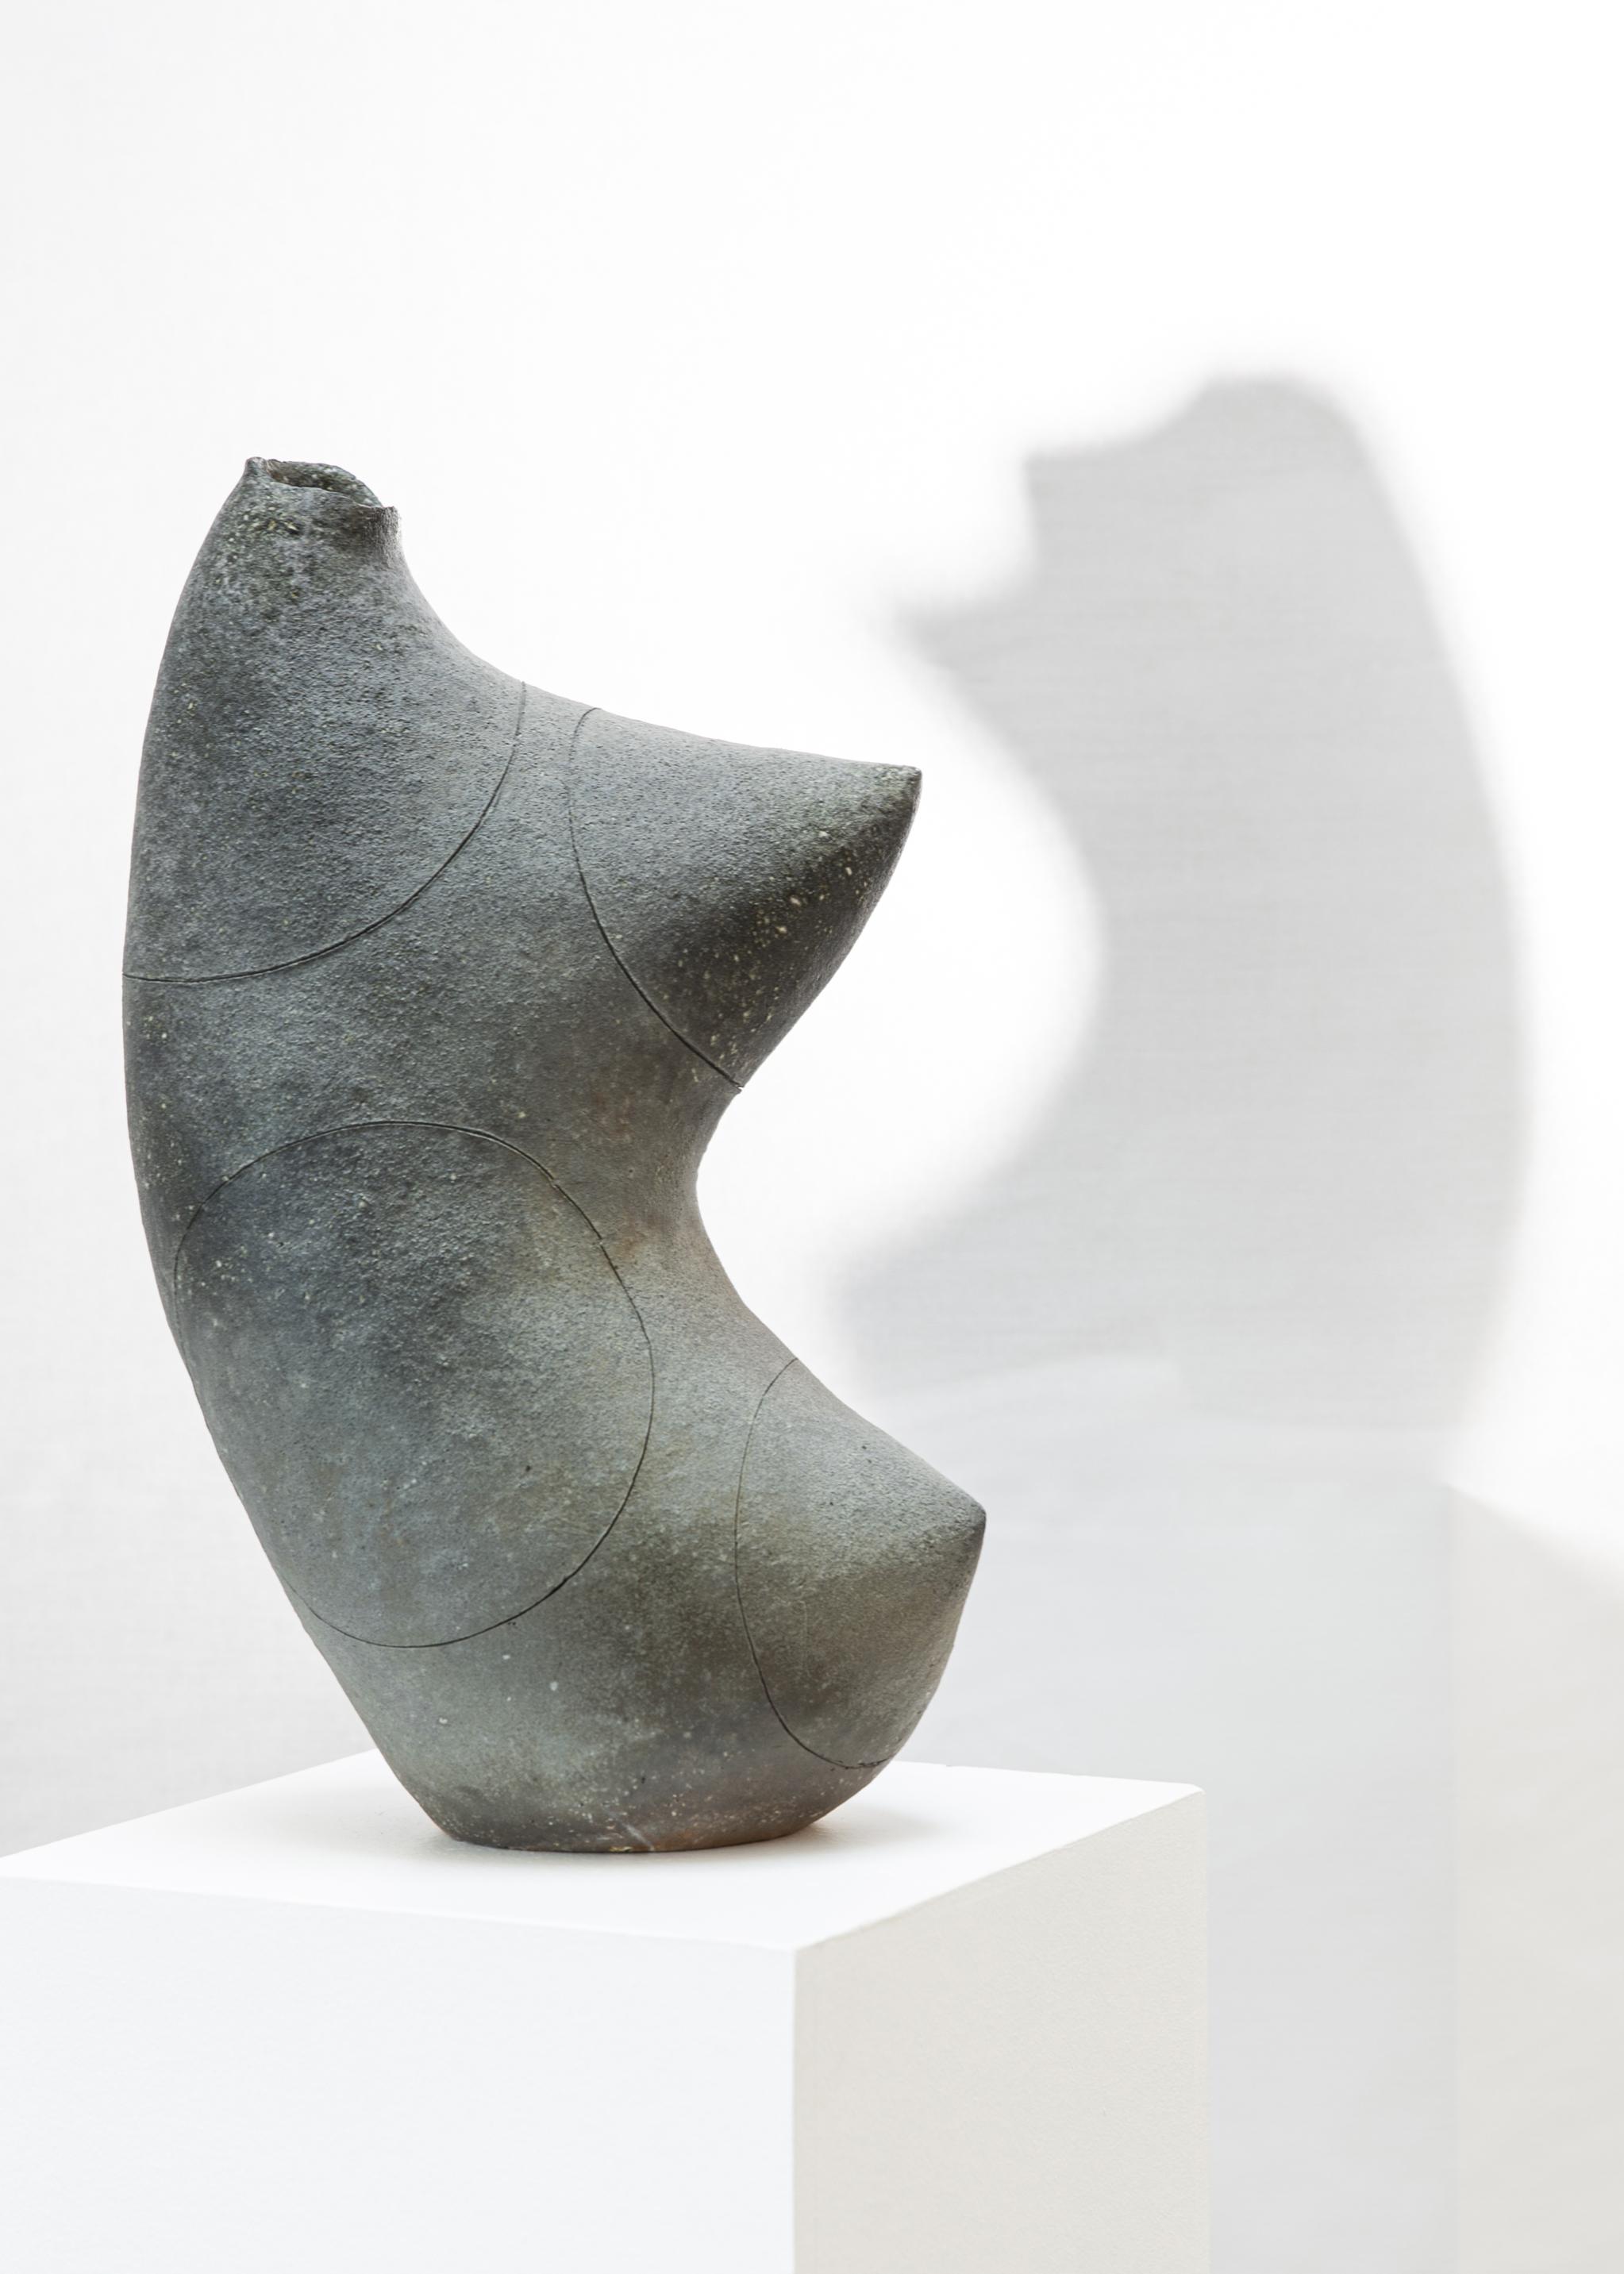 BORN, NOT MADE - Ceramics by Yasuhisa Kohyama